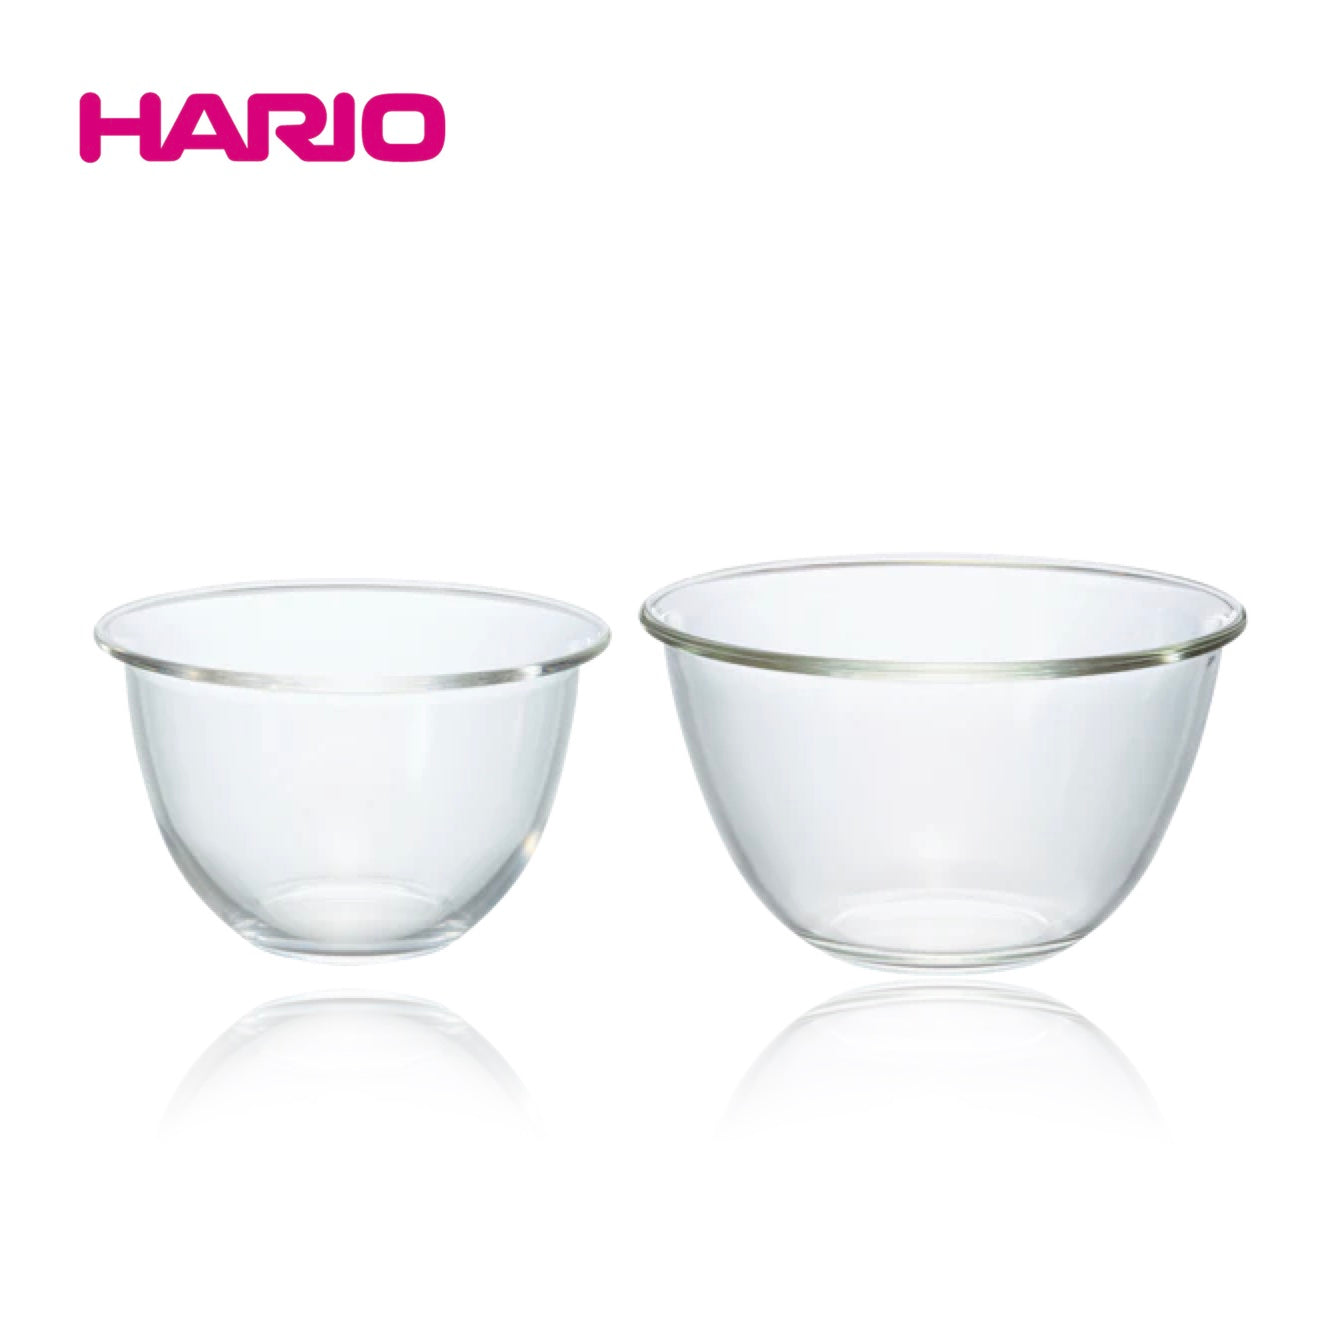 Hario Glass Mixing Bowl